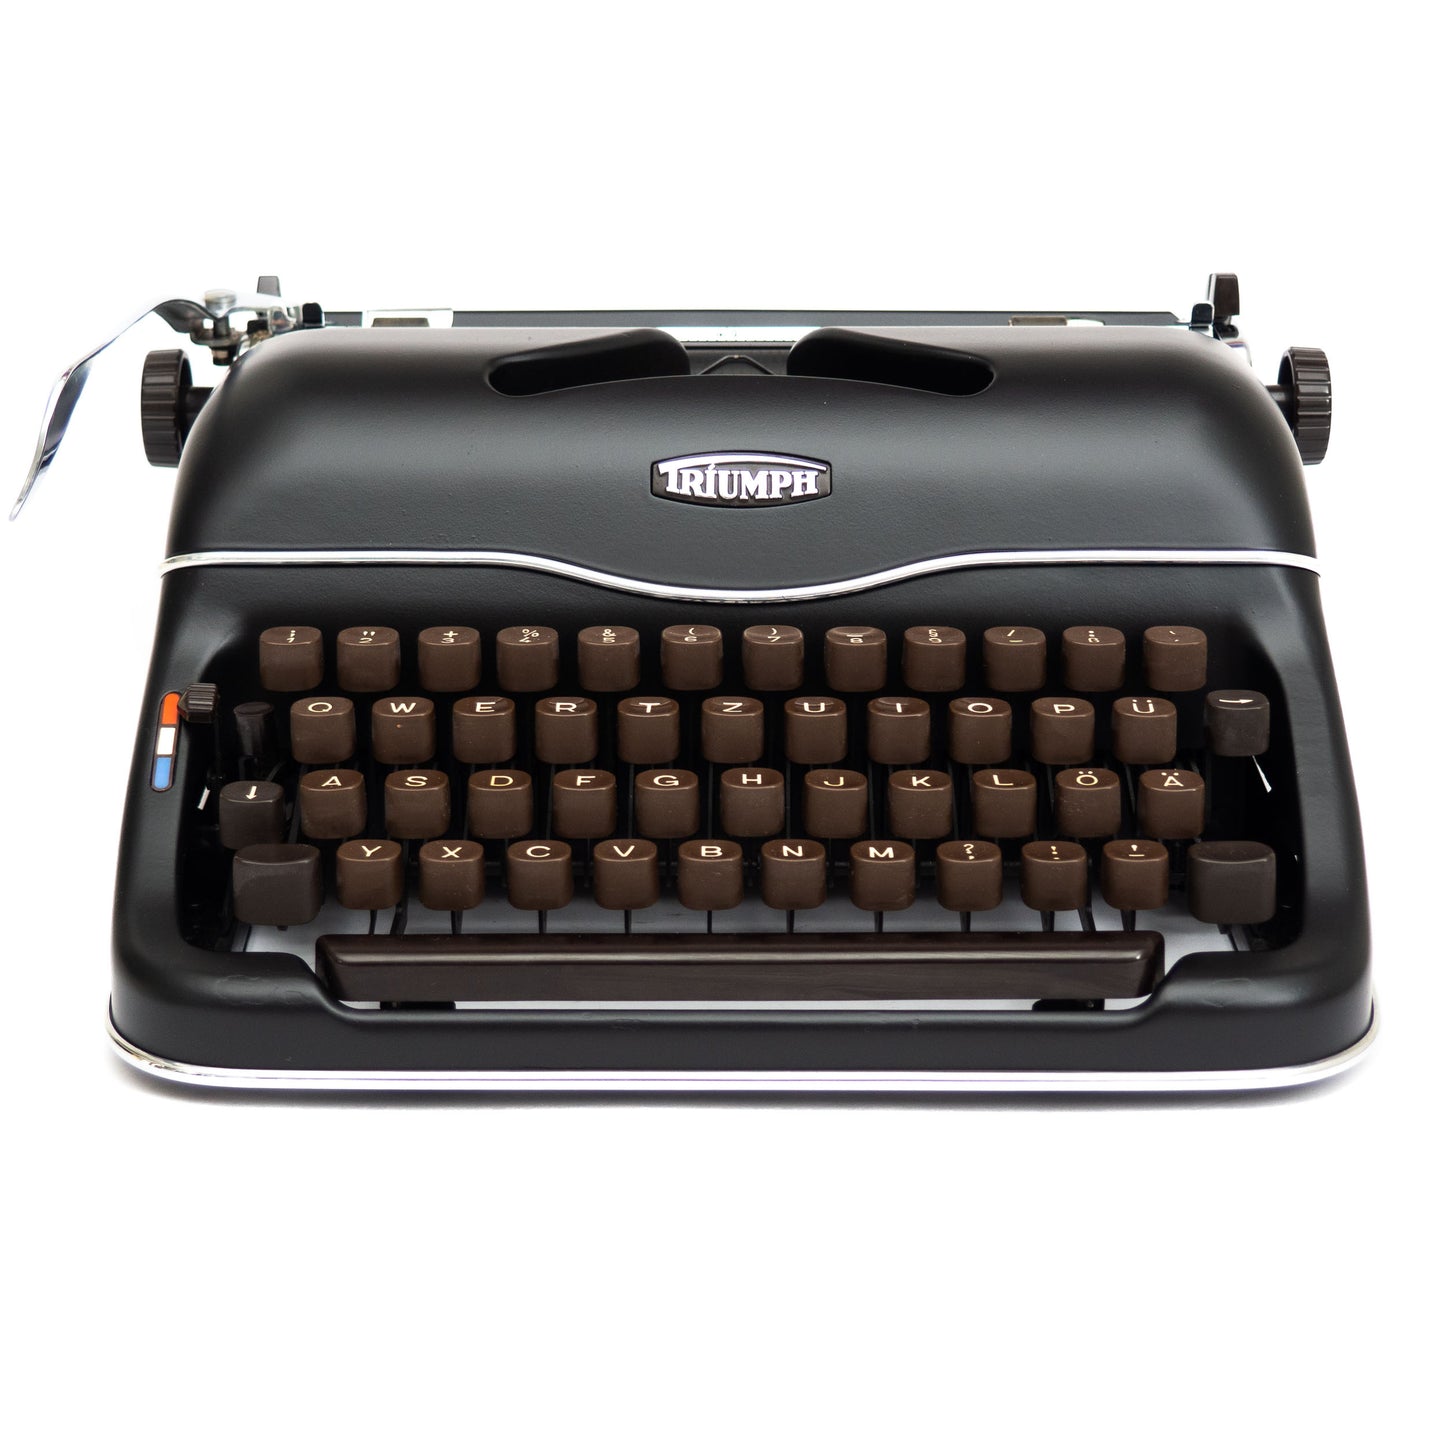 Triumph Typewriter Black